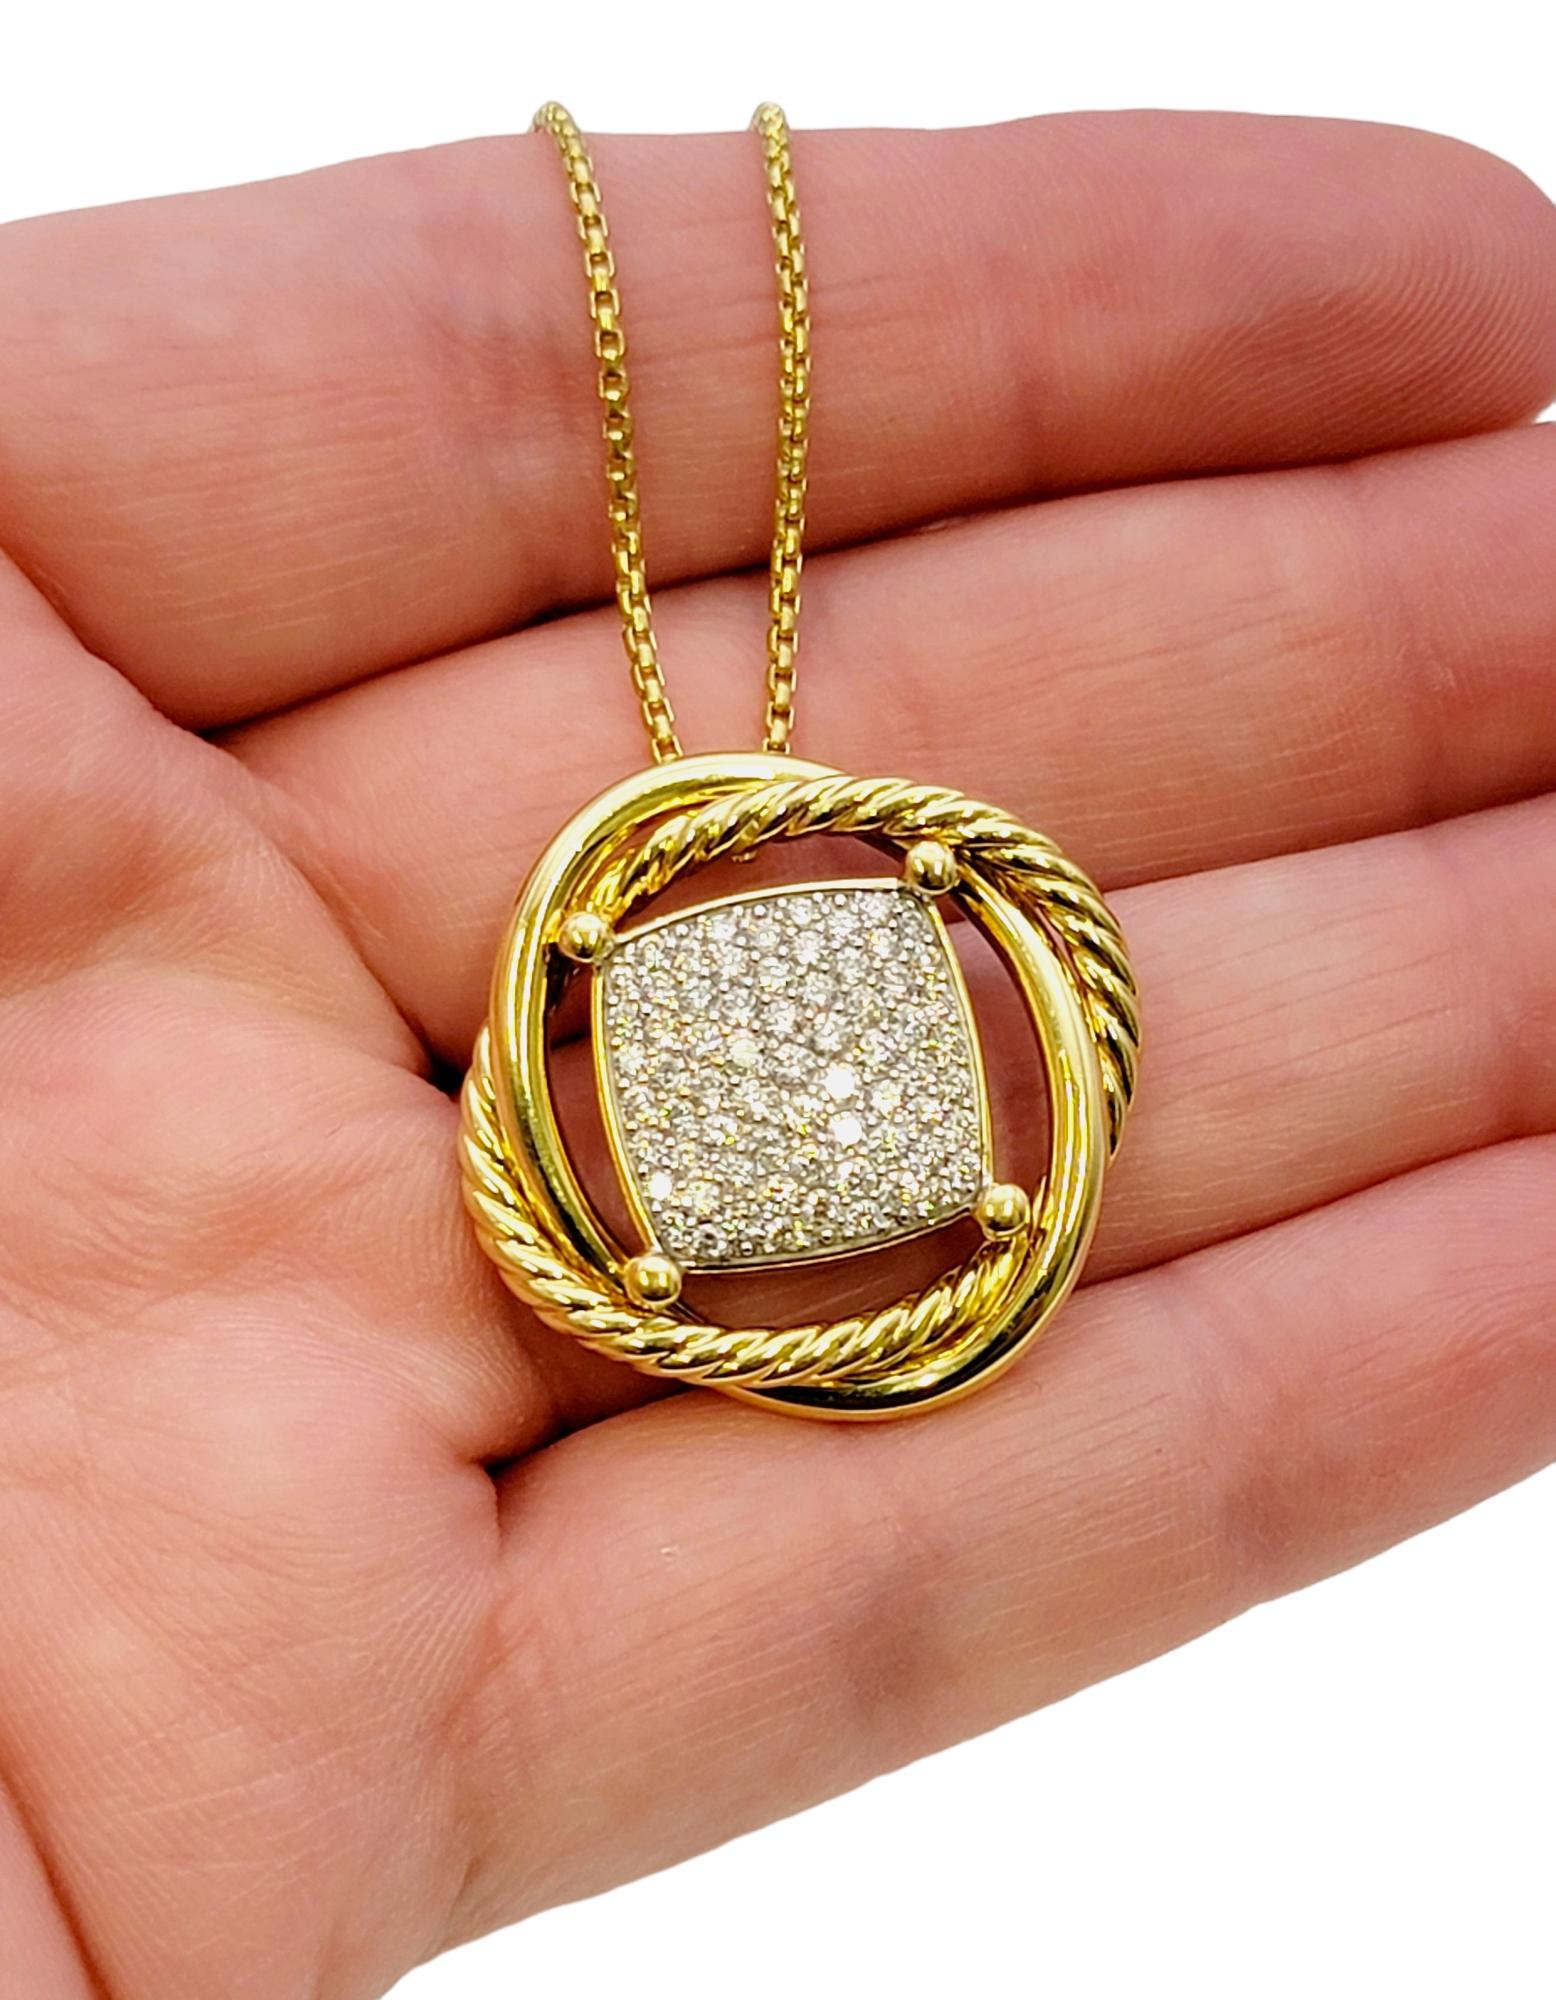 David Yurman 18 Karat Yellow Gold Pave Diamond Large Infinity Pendant Necklace  For Sale 1